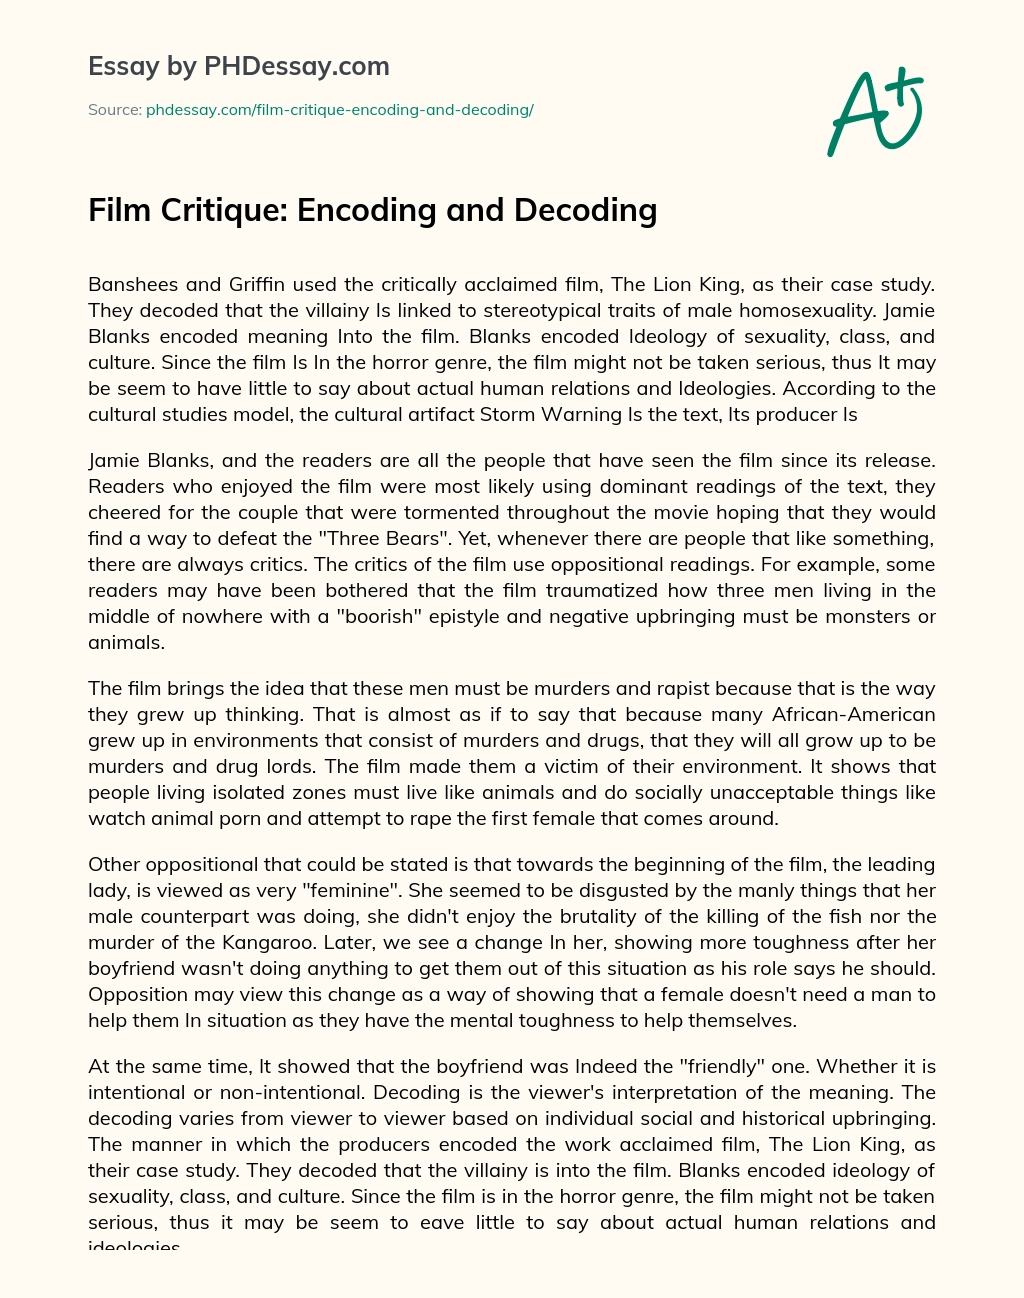 Film Critique: Encoding and Decoding essay